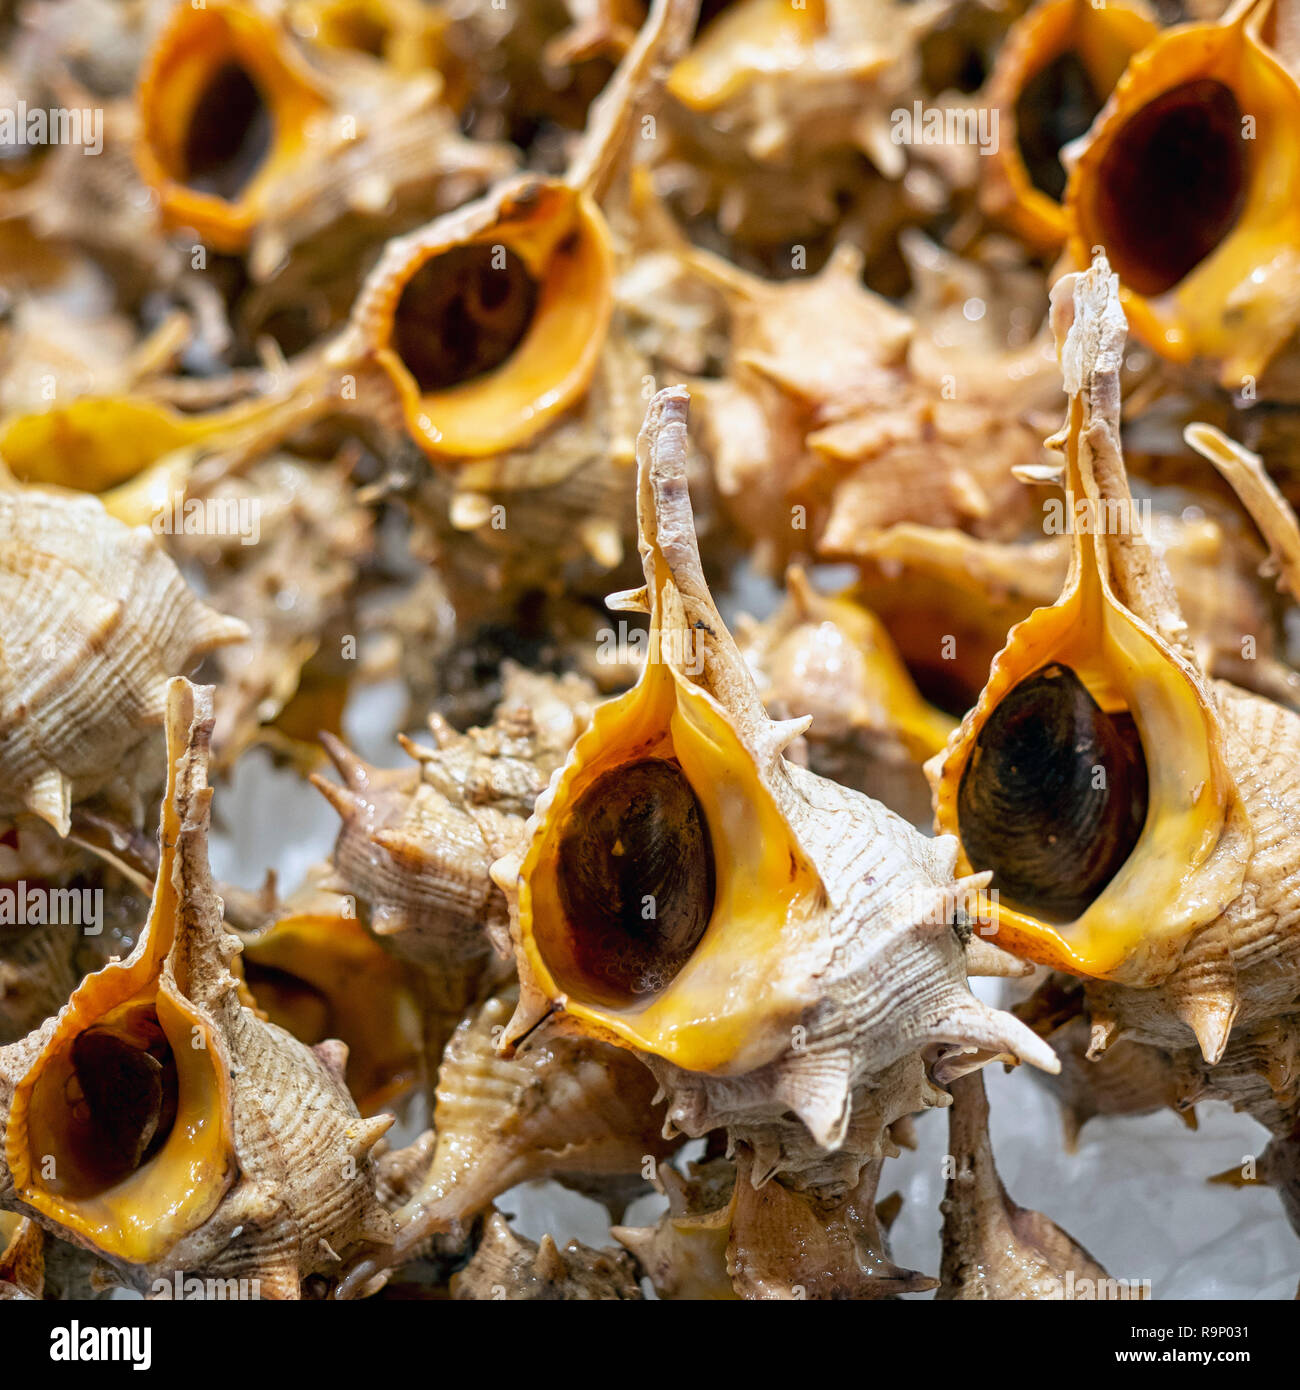 Purple Dye Murex or Spiny Dye-Murex (Bolinus brandaris) sea snails at a Spanish Market Stock Photo